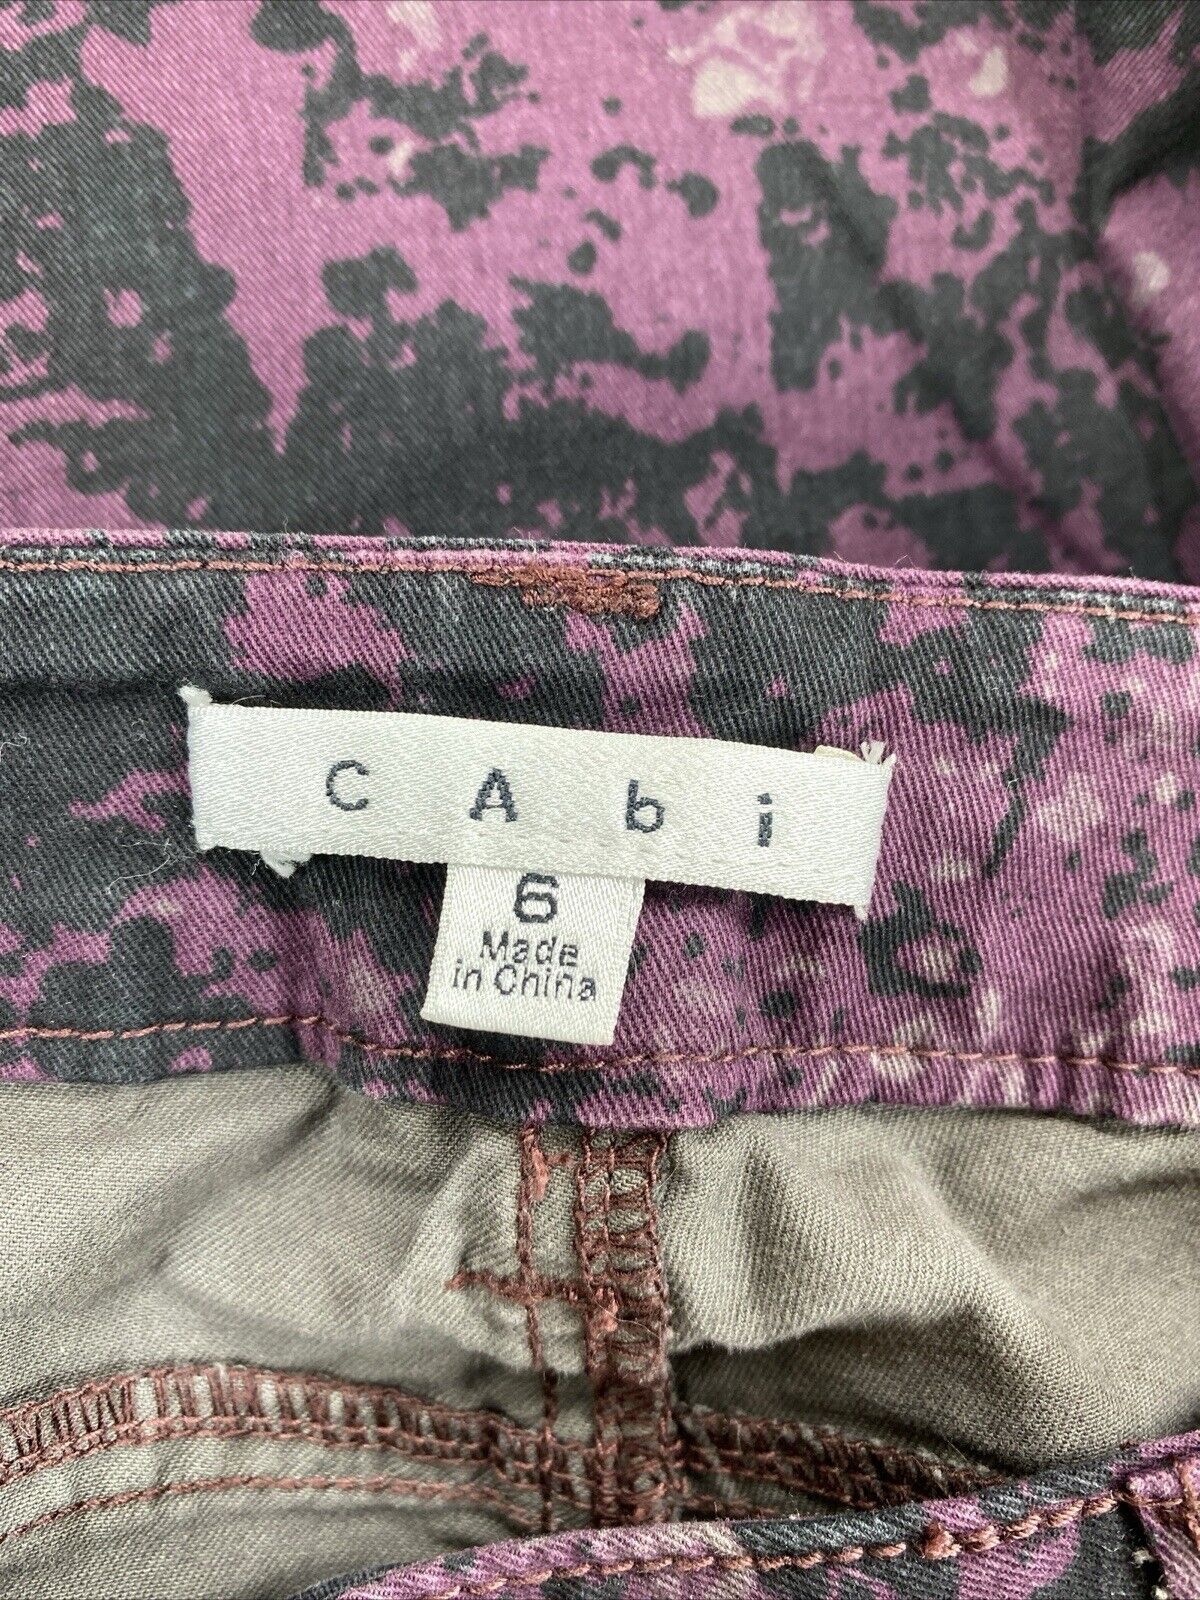 Cabi Women's Purple Patterned Skinny Stretch Jeans - 6